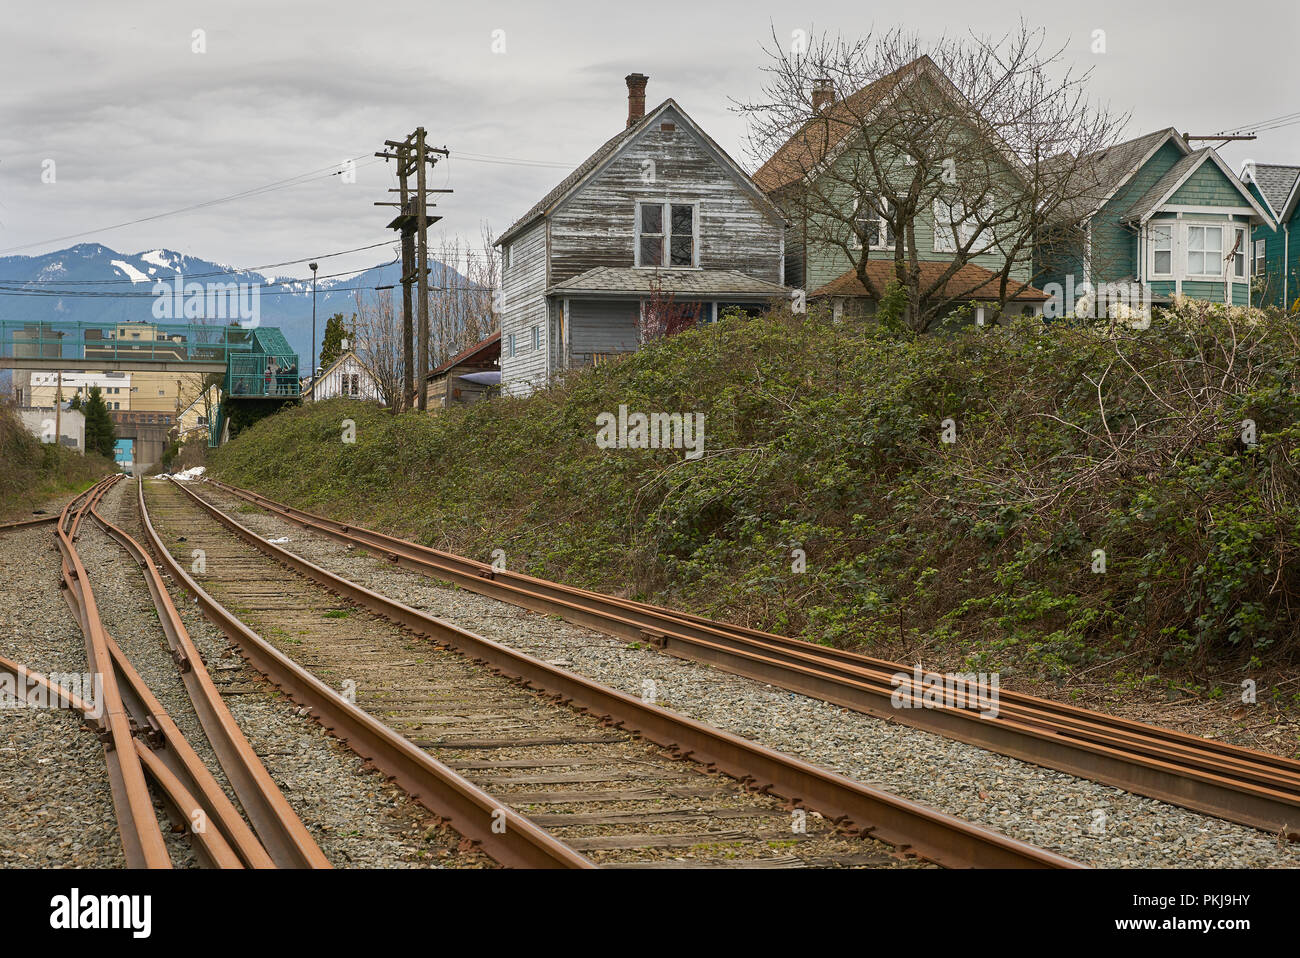 Urban Railroad Tracks, Vancouver. Railroad tracks running through an urban centre. Stock Photo